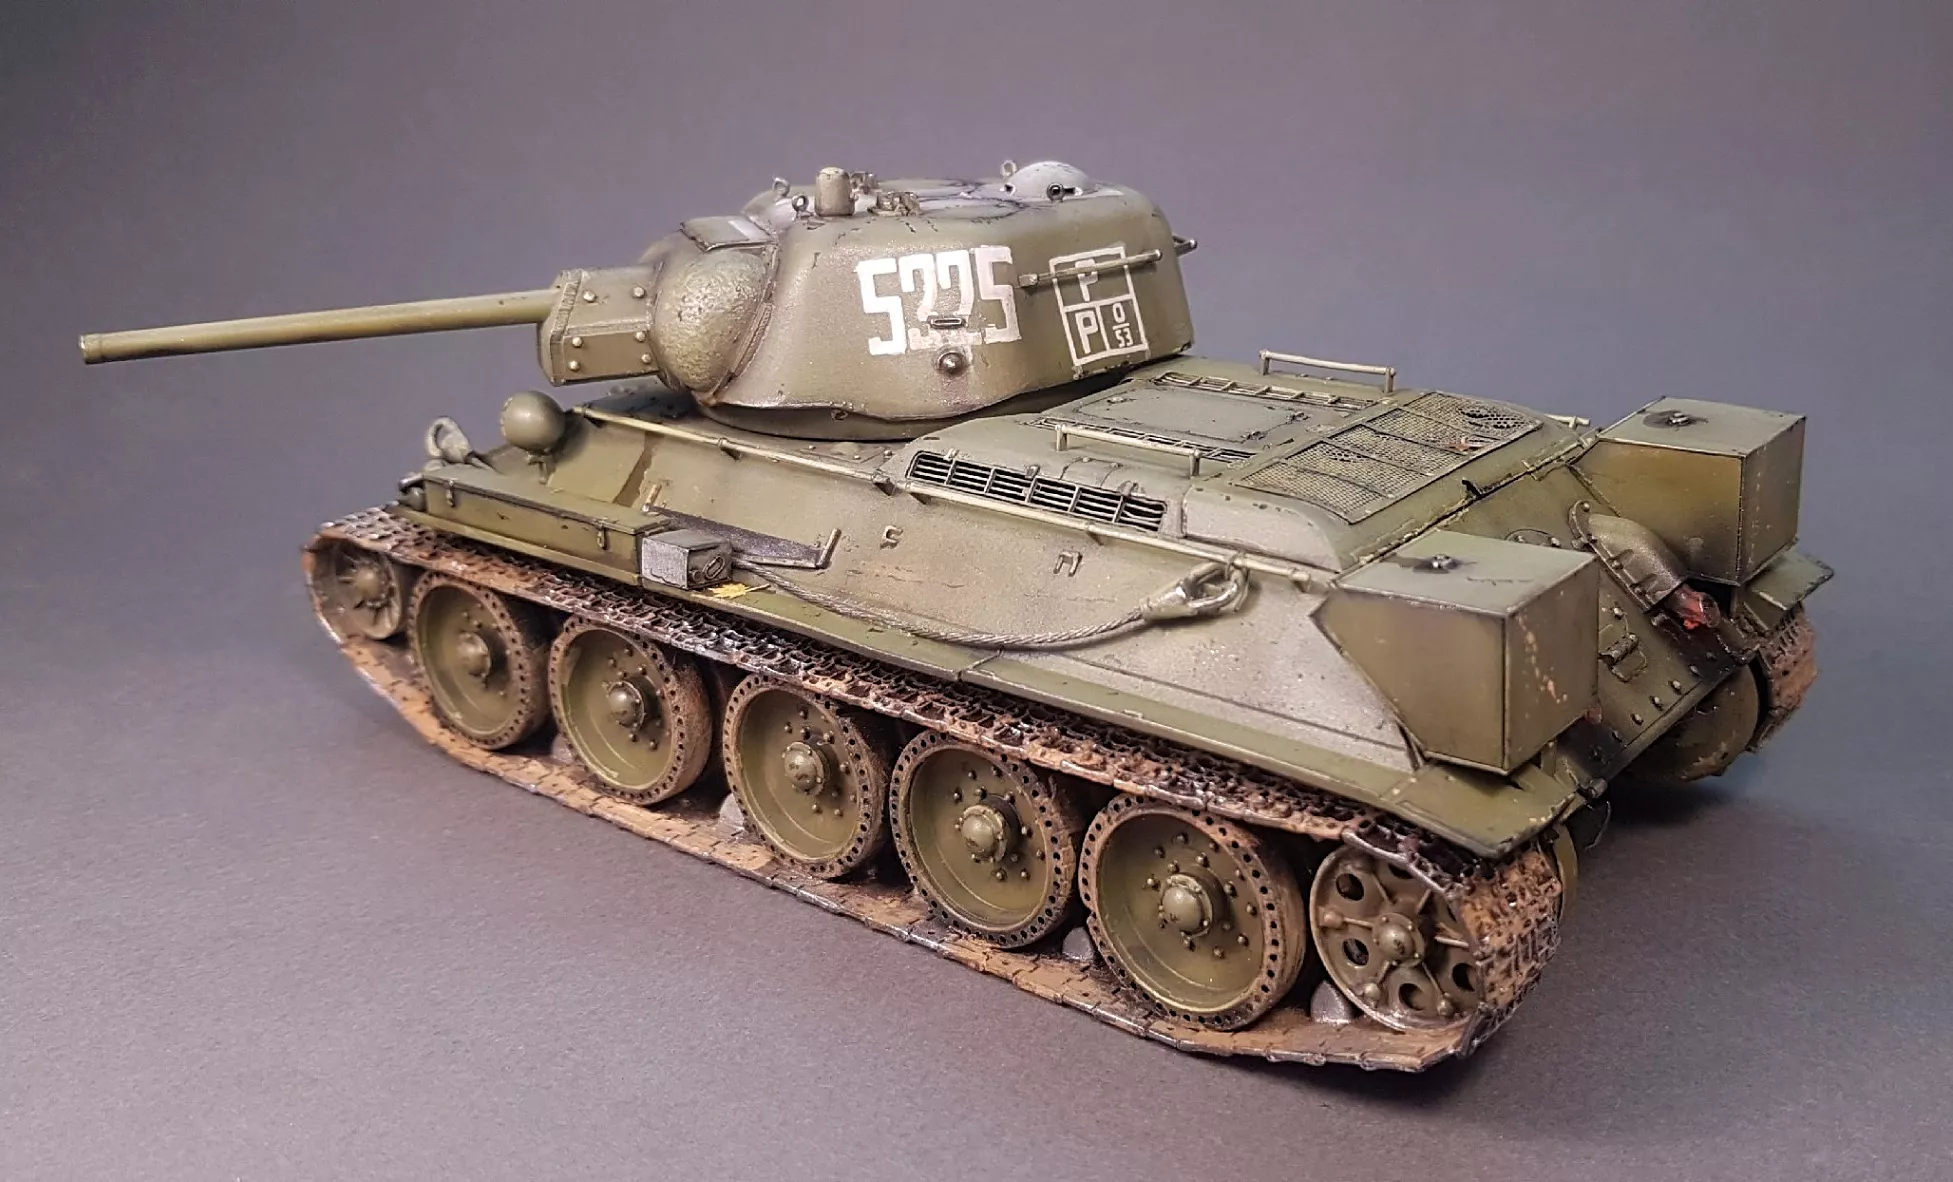 Советский средний танк Т-34/76 1943 УЗТМ